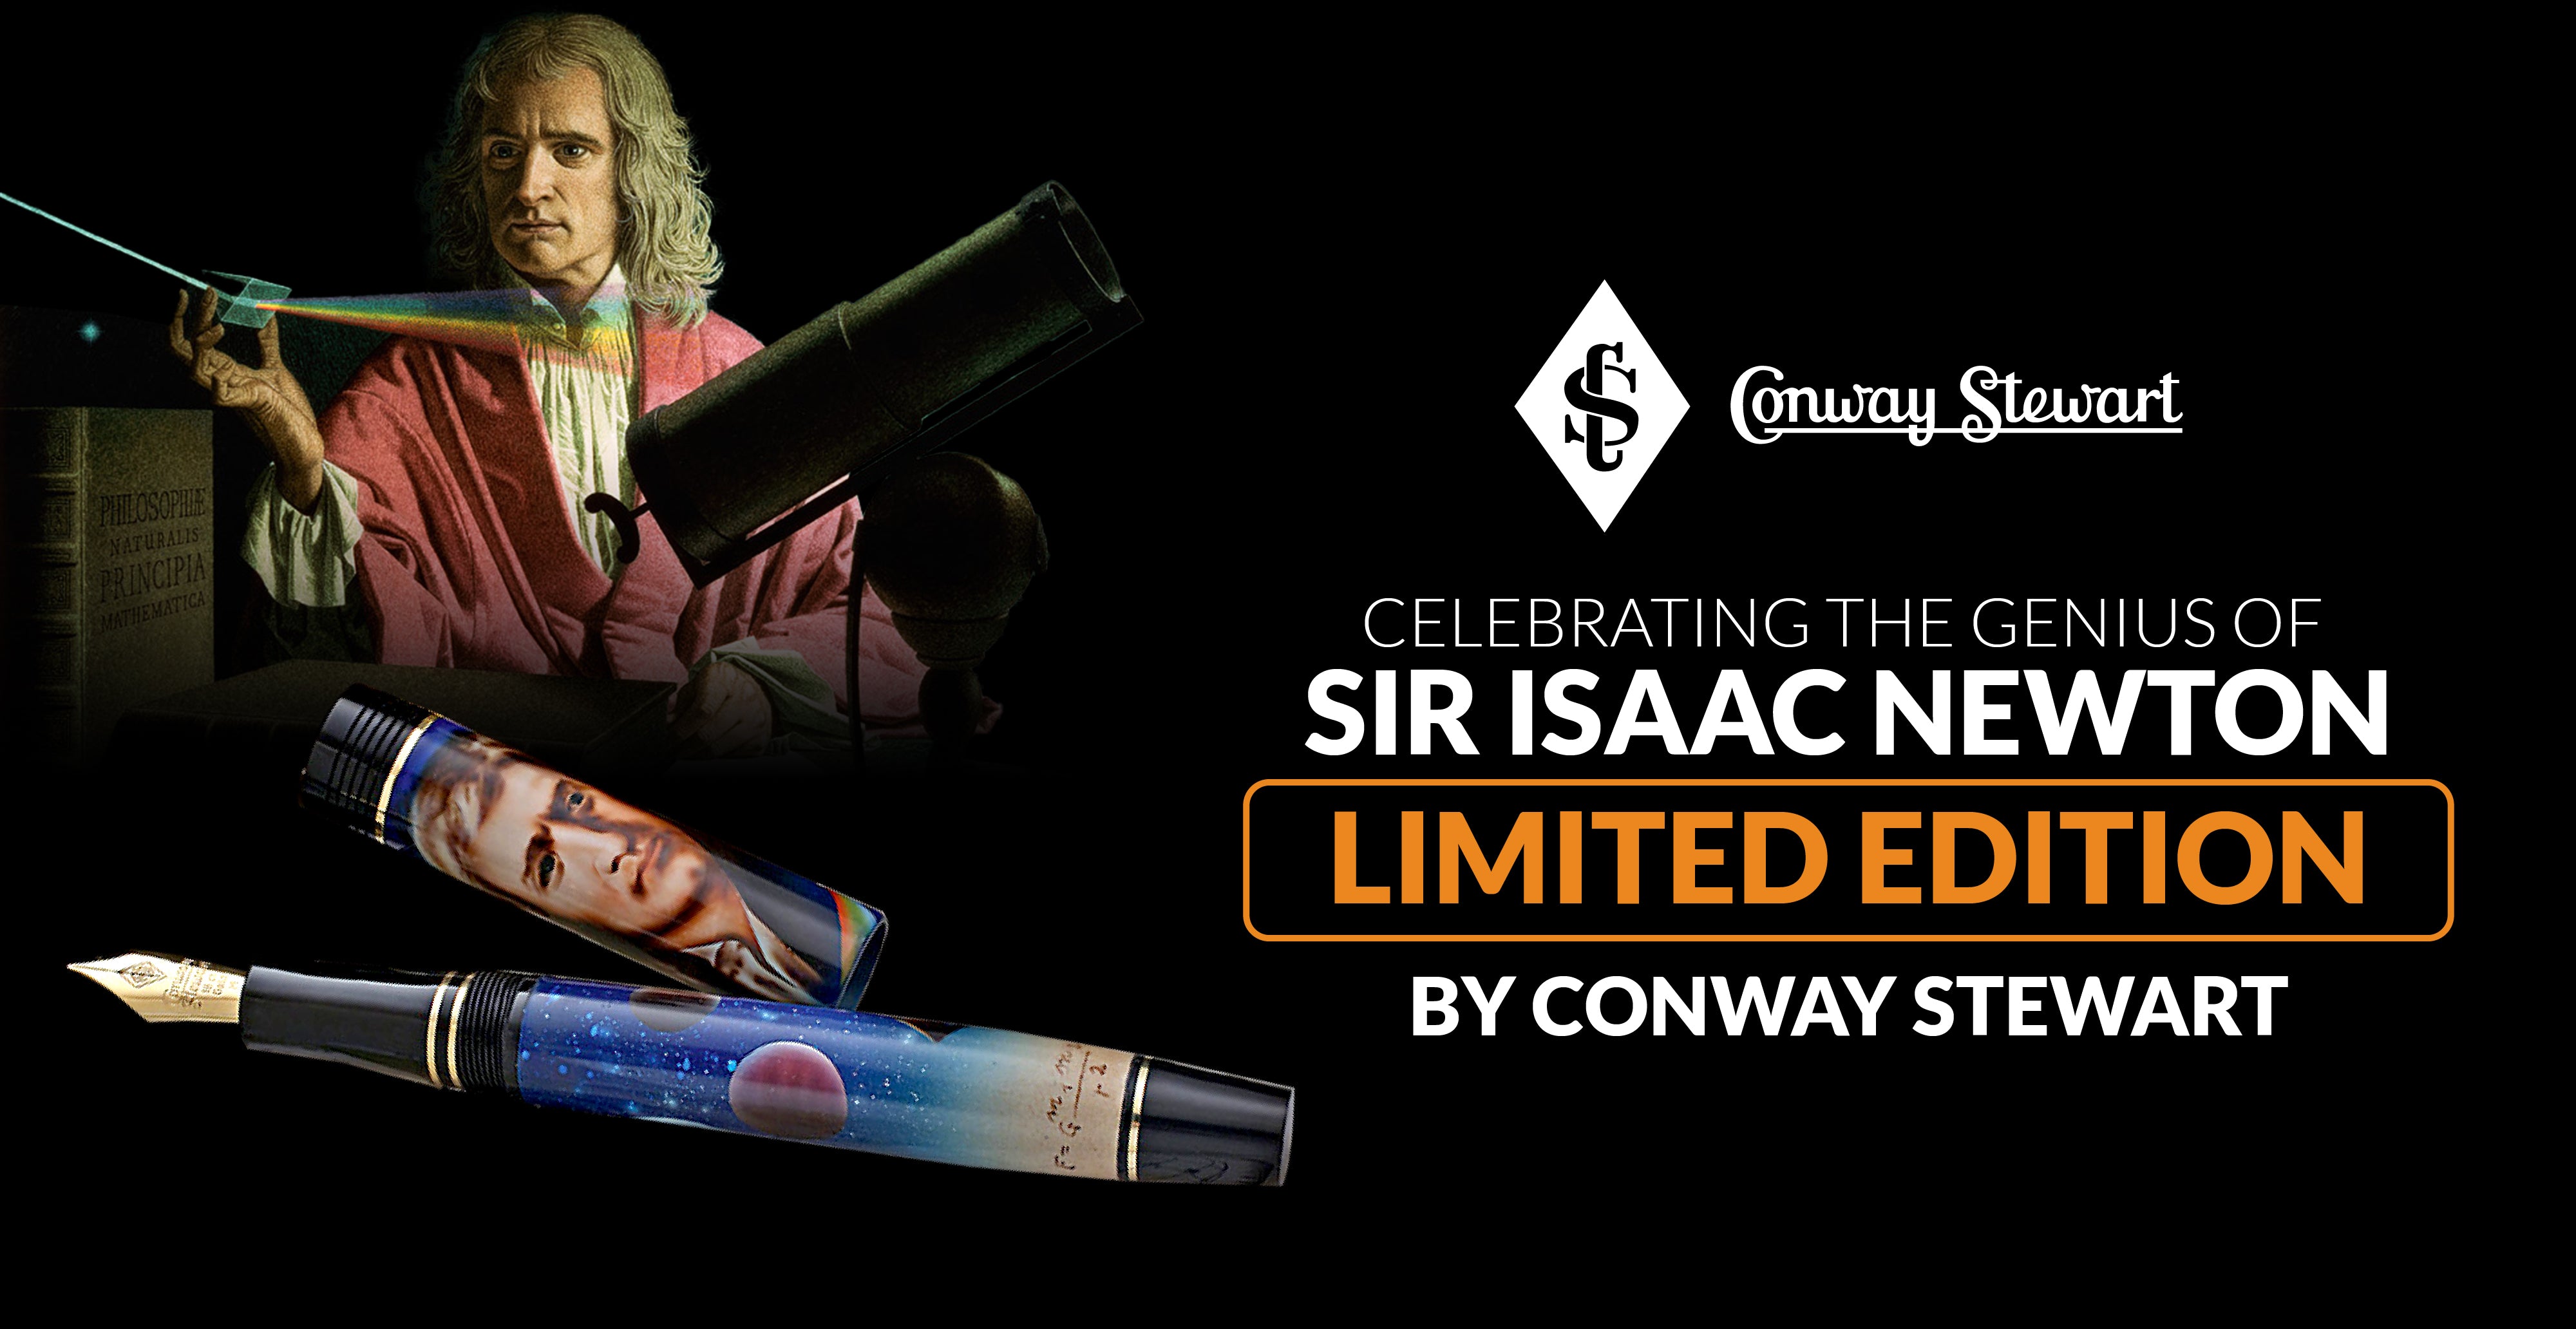 Conway Stewart 'Sir Isaac Newton' Limited Edition